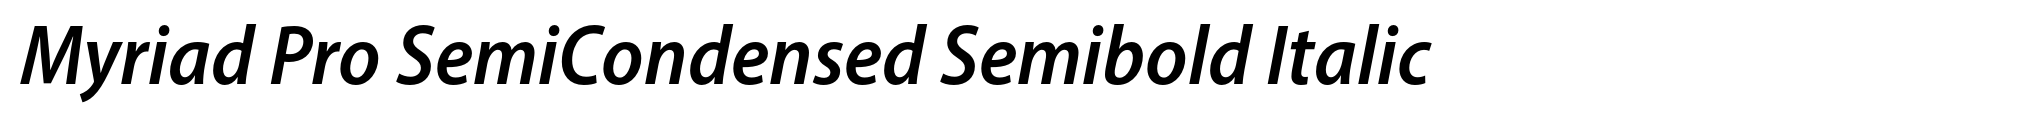 Myriad Pro SemiCondensed Semibold Italic image